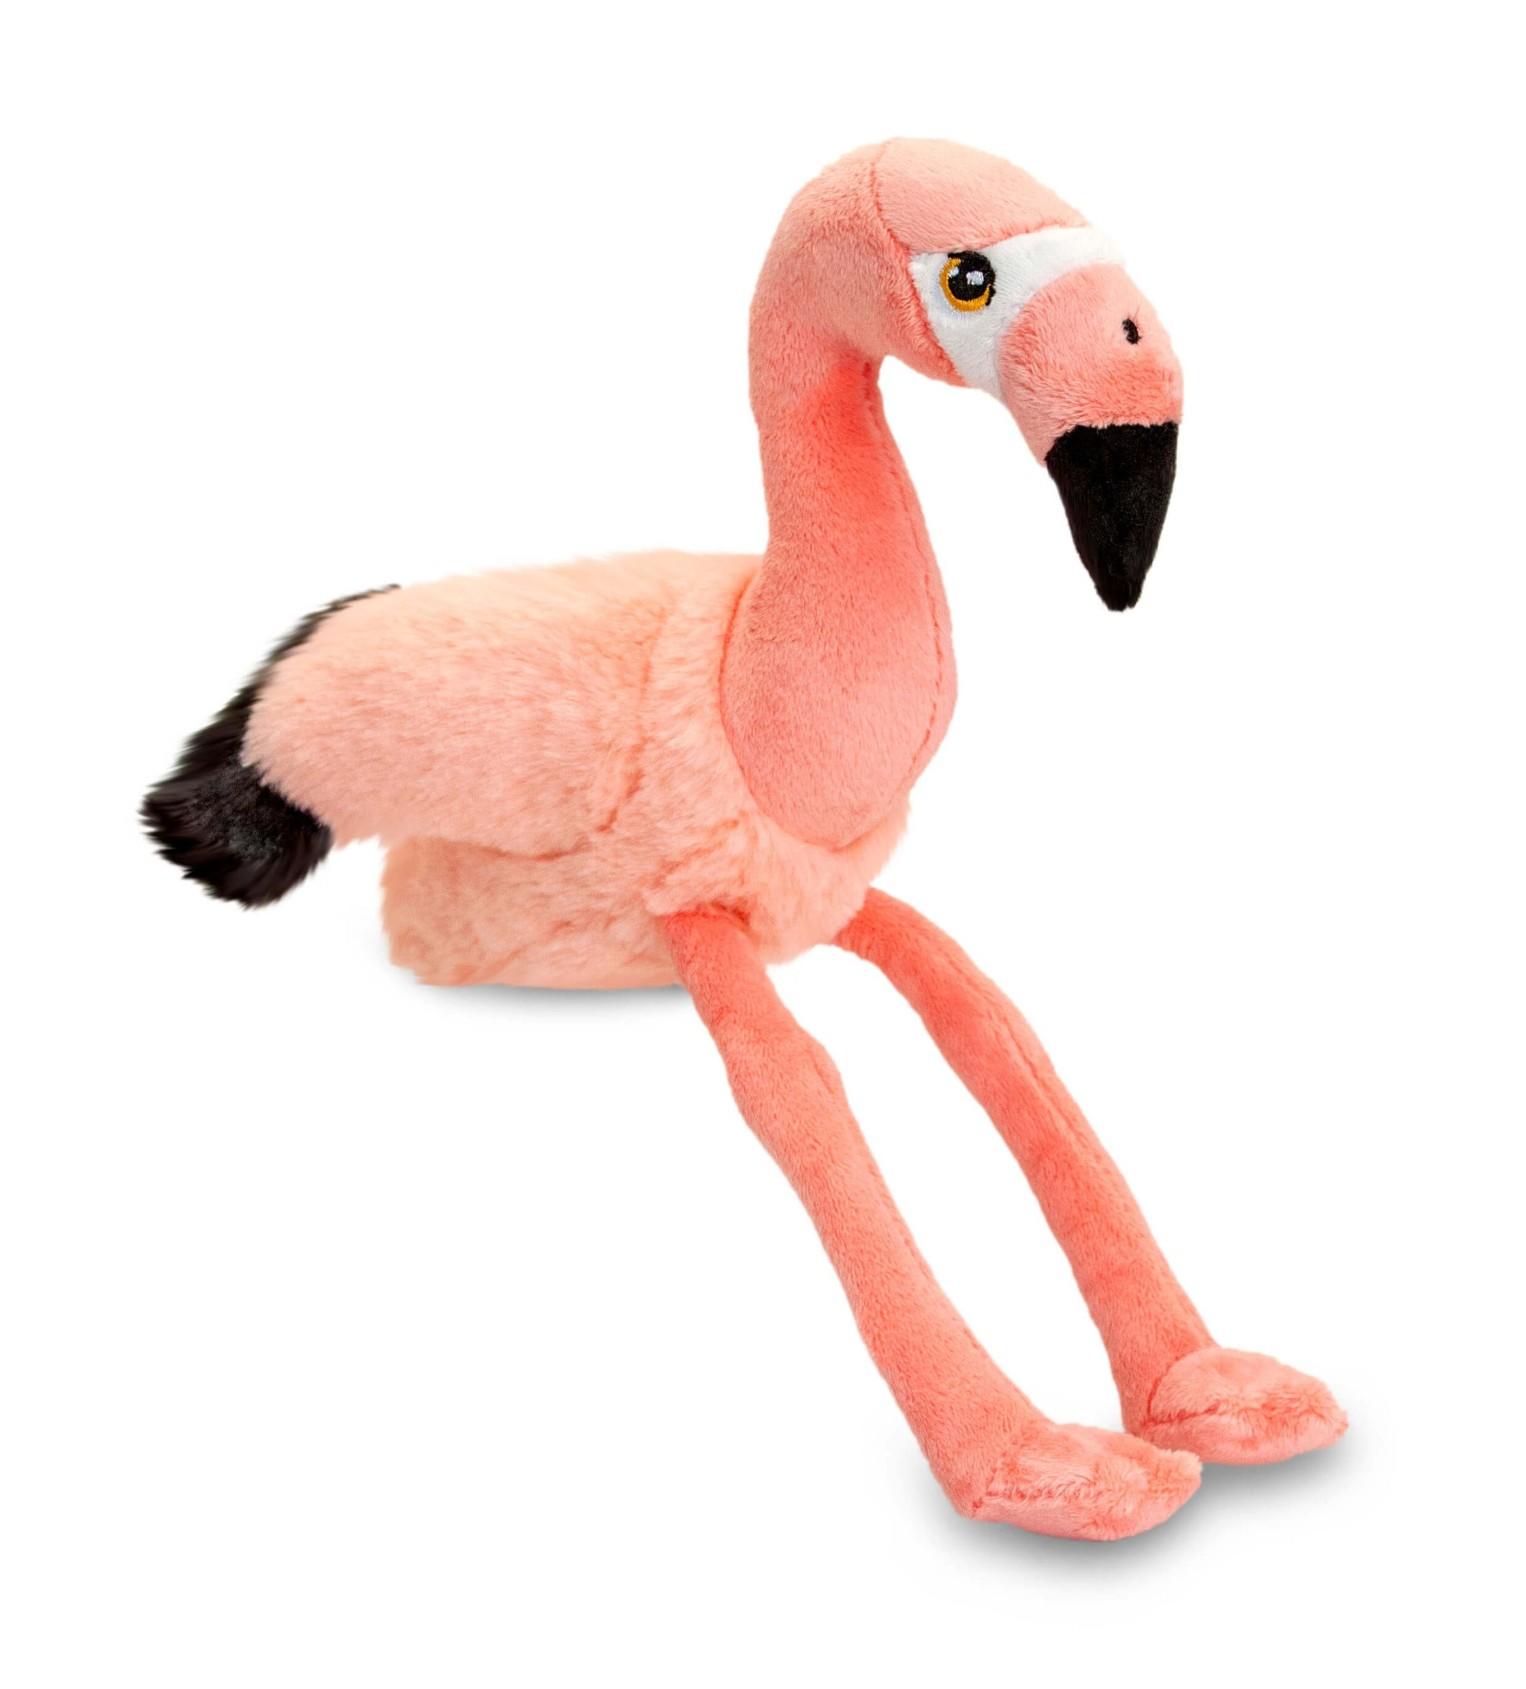 Pink flamingo soft toy.